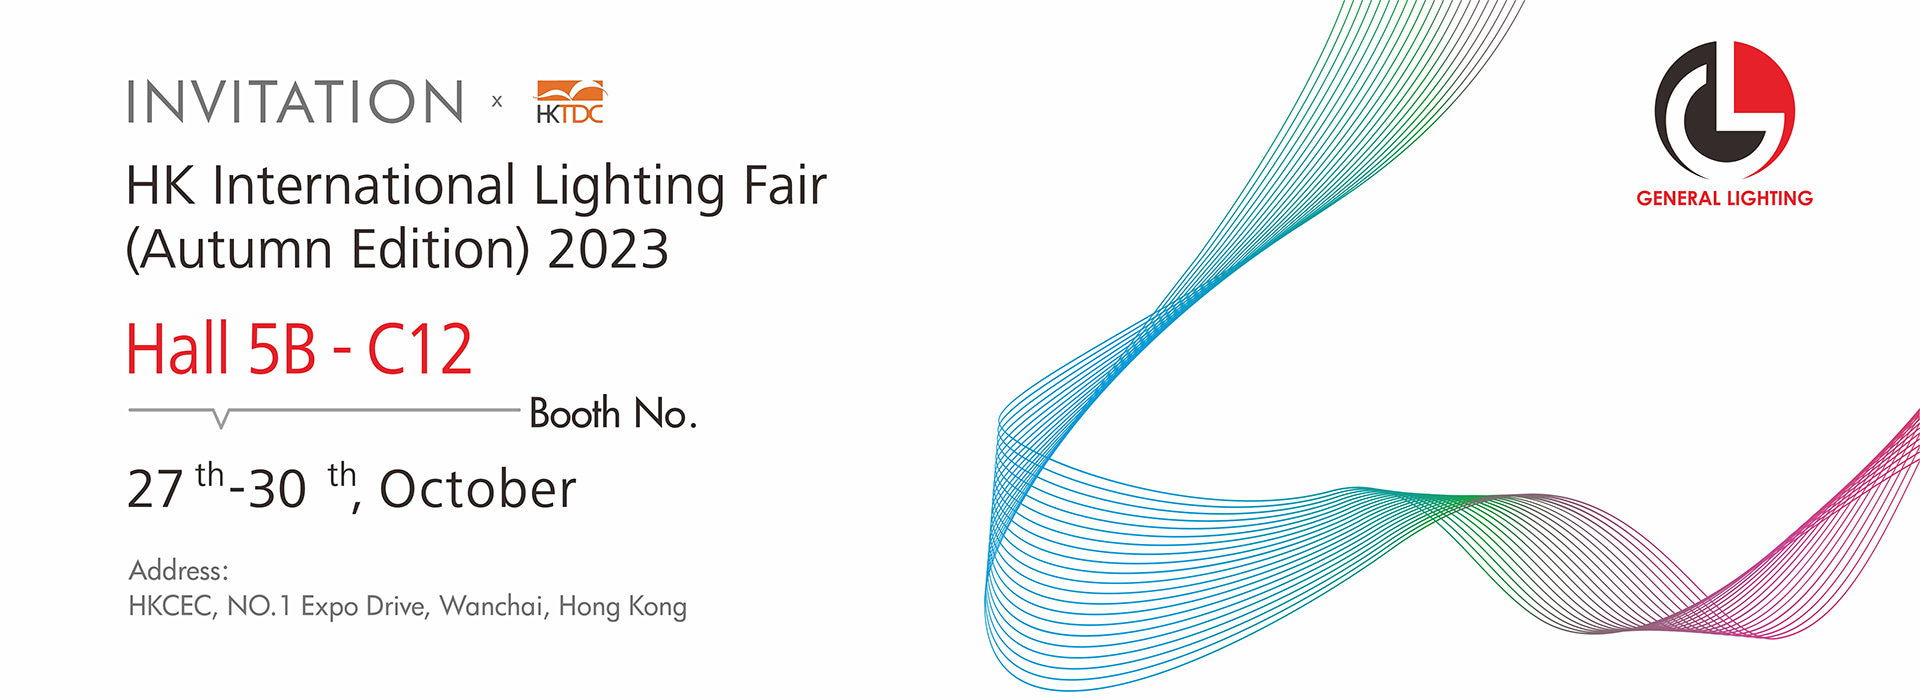 GL INVITATION -HK Autumn Lighting Fair 2023